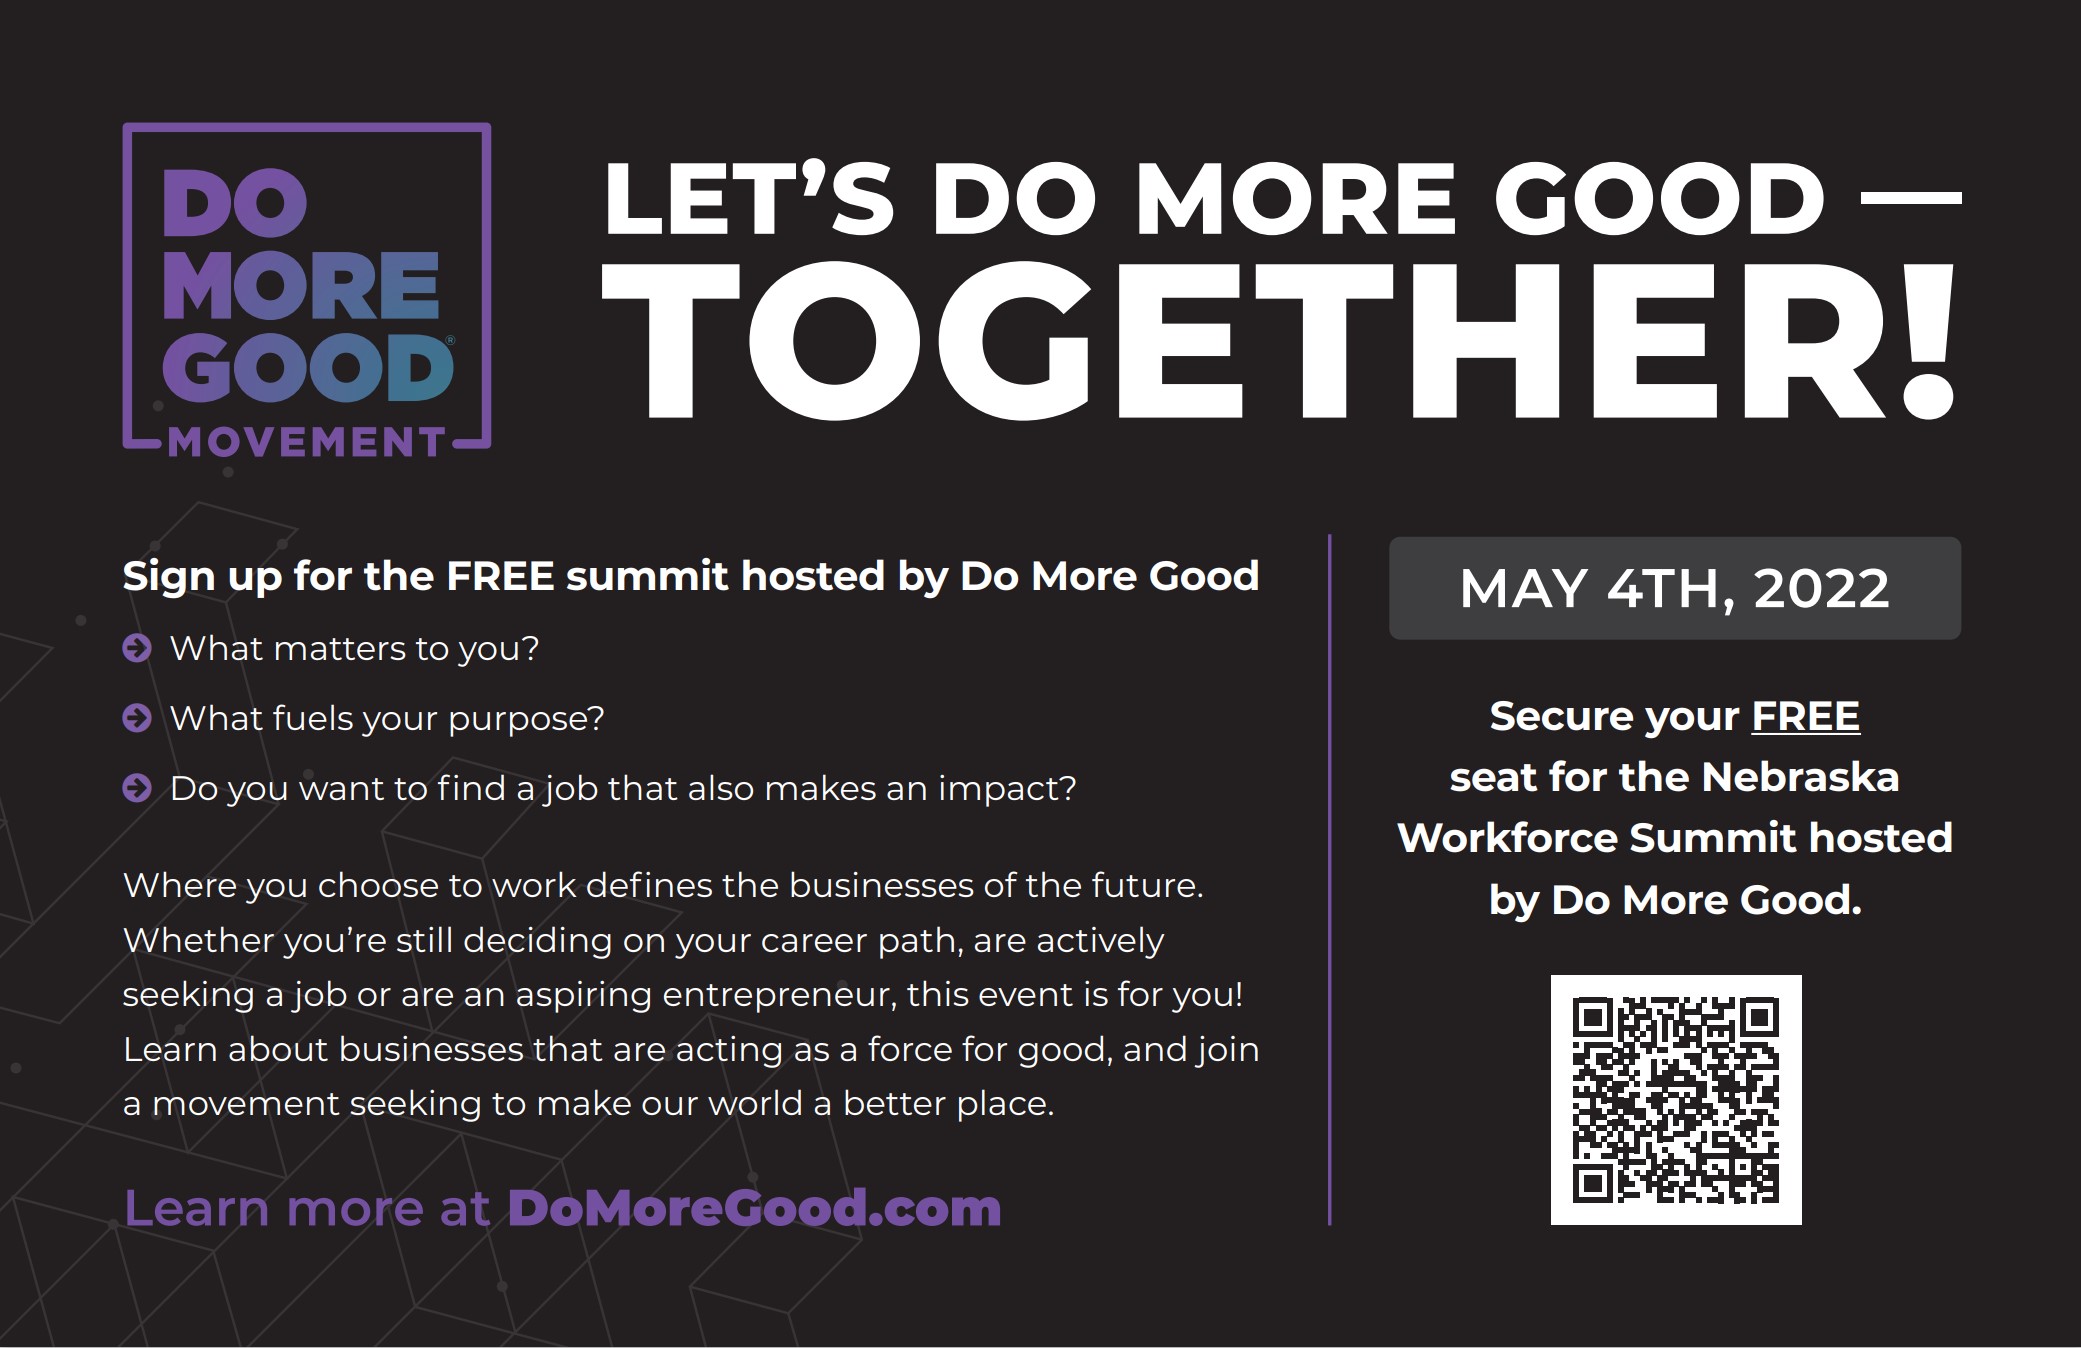 Do More Good Movement - Nebraska Workforce Summit